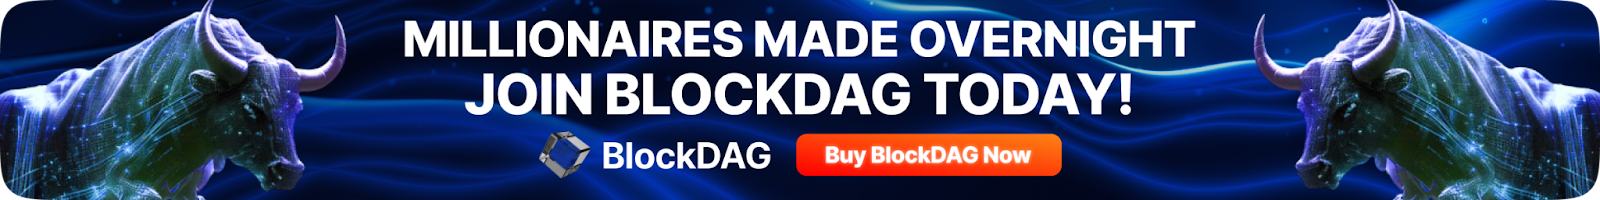 M.I.T Wiz Maurice Herlihy on BlockDAG Team –  Team Eyes Top 30 Market Cap Spot While Toncoin & ADA Prices Rebound